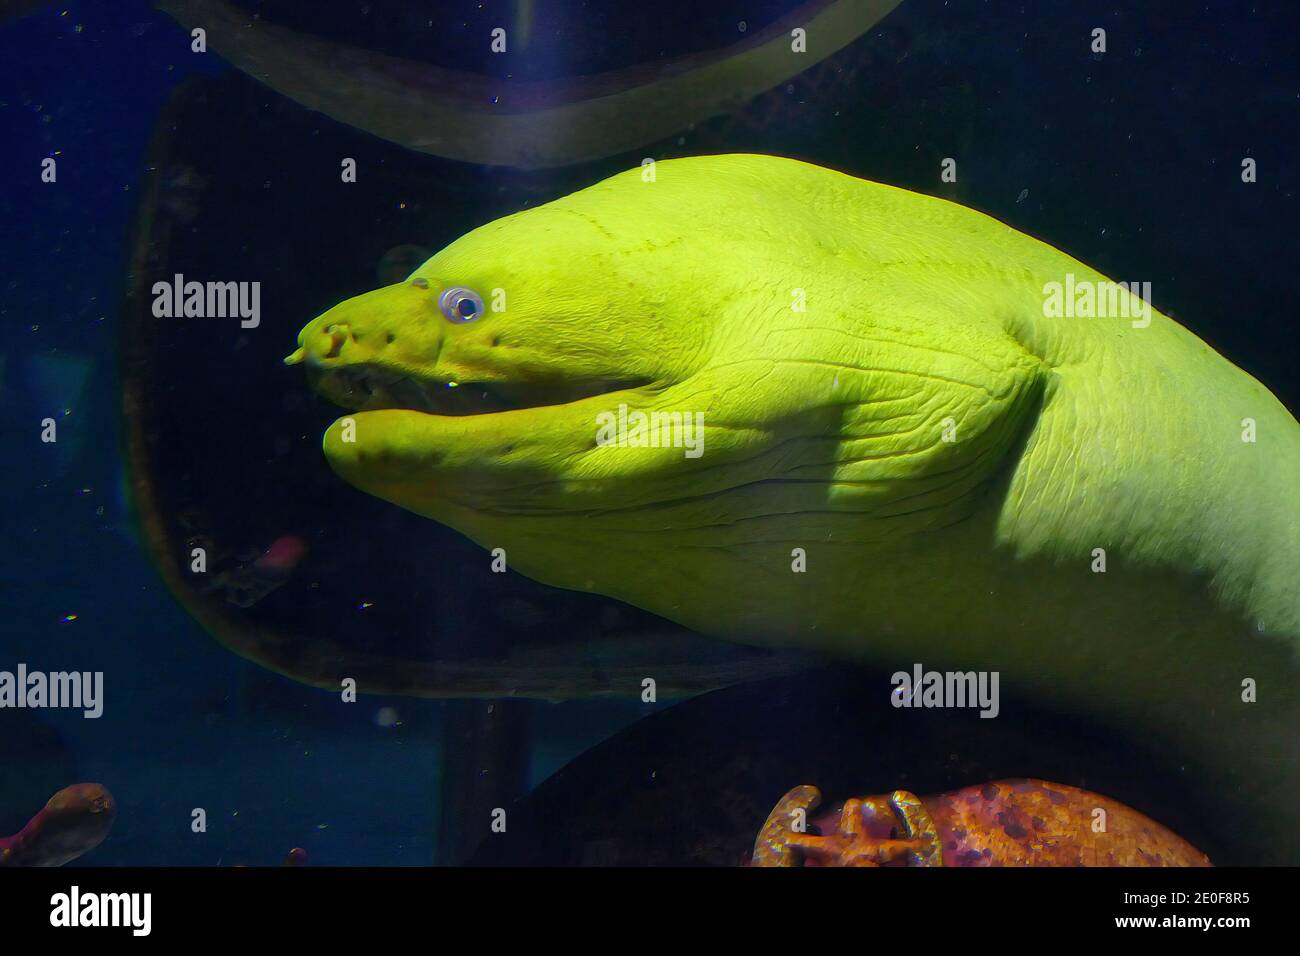 NEWPORT, OREGON - MAY 22, 2018 - Green moray eel ( Gymnothorax funebris ) in tank with diving helmets,  Newport, Oregon Stock Photo